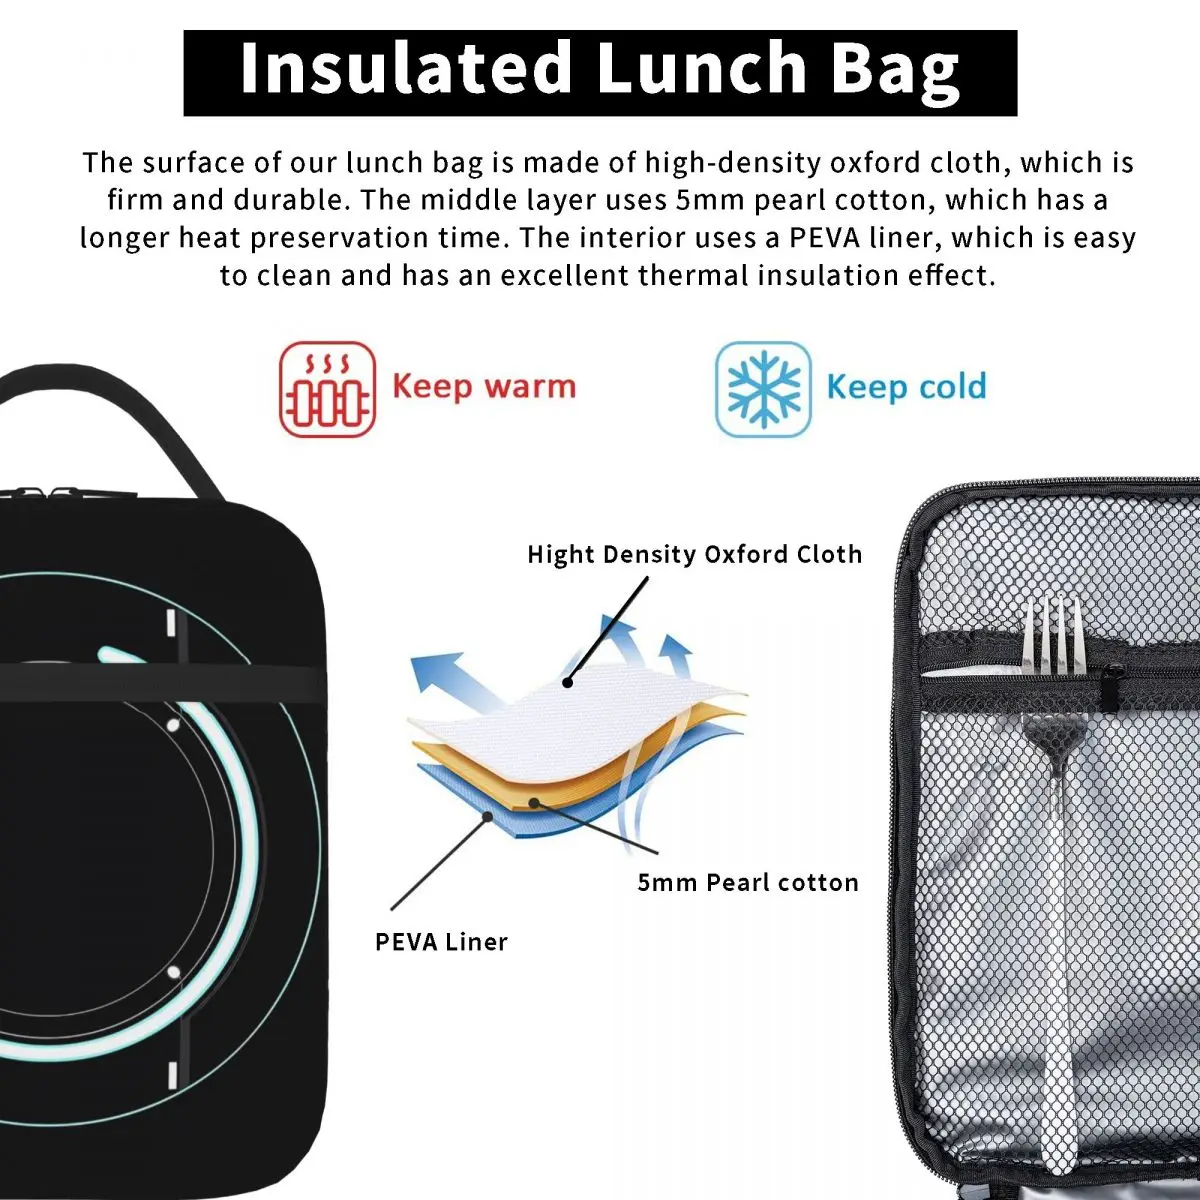 Корпоративна диск Tron Legacy, чанта за обяд, Изолационни пакети, Термосумка за обяд . ' - ' . 4